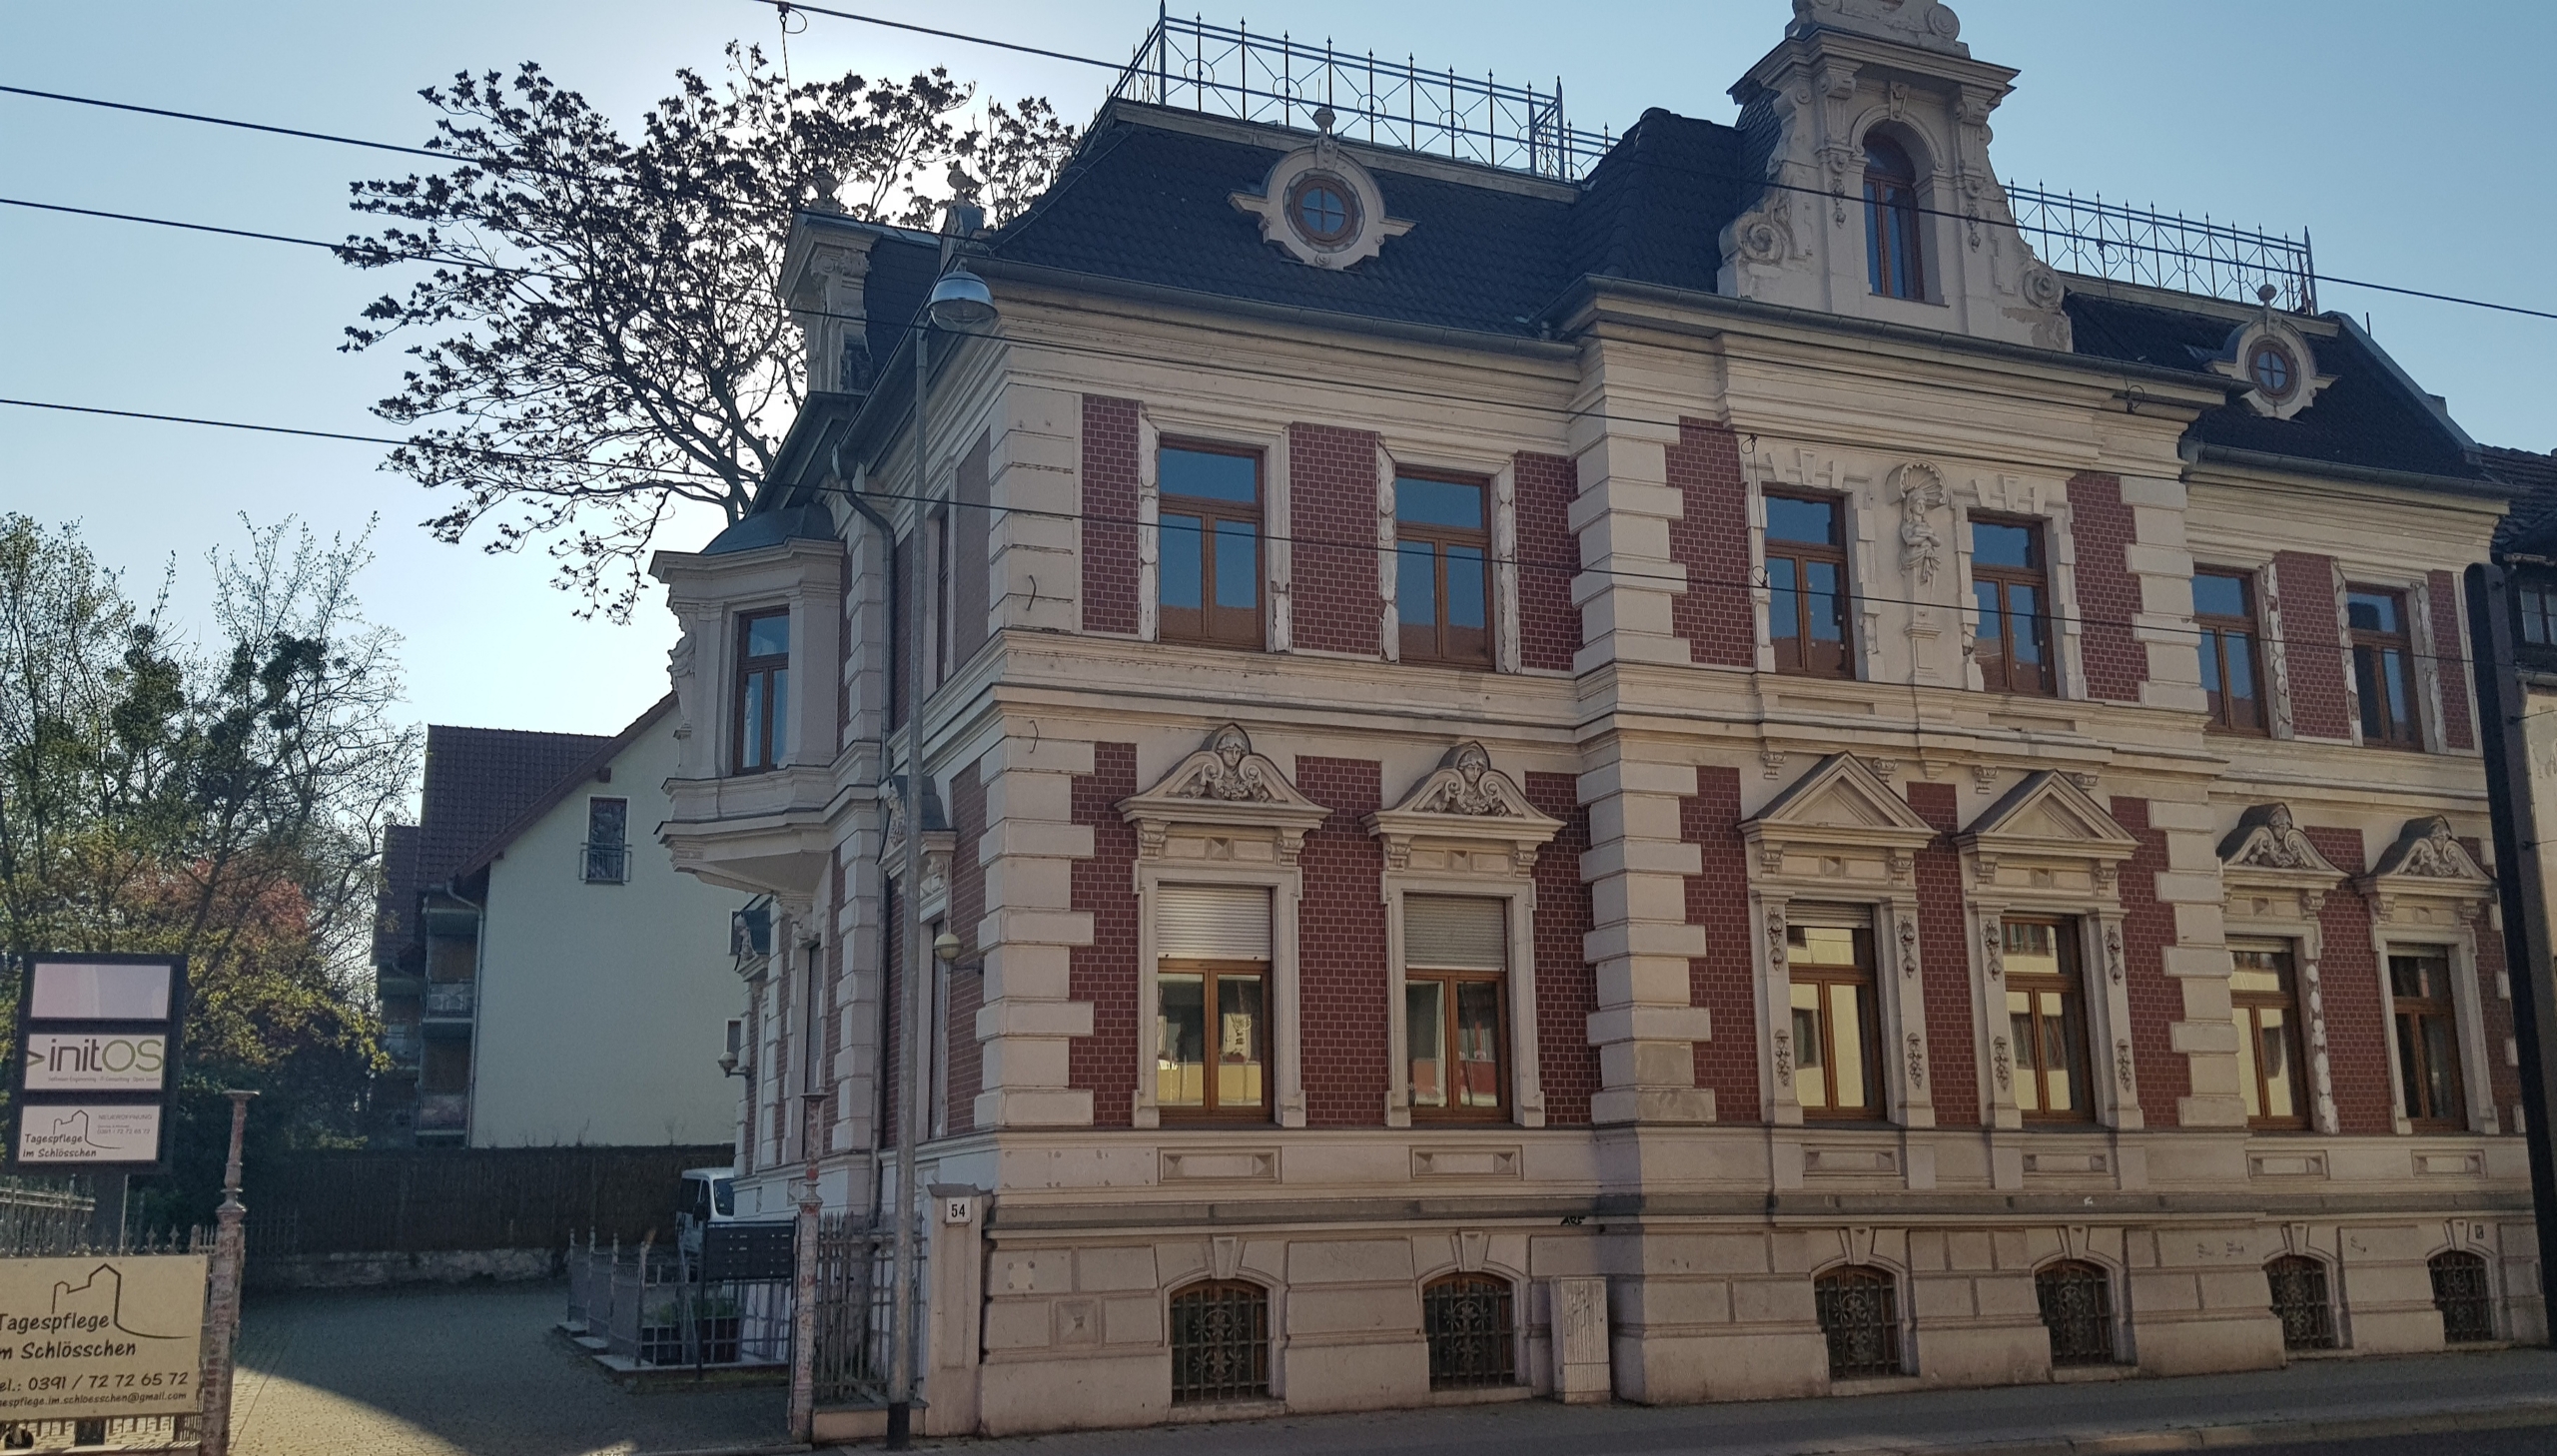 Villa Thiem in Magdeburg